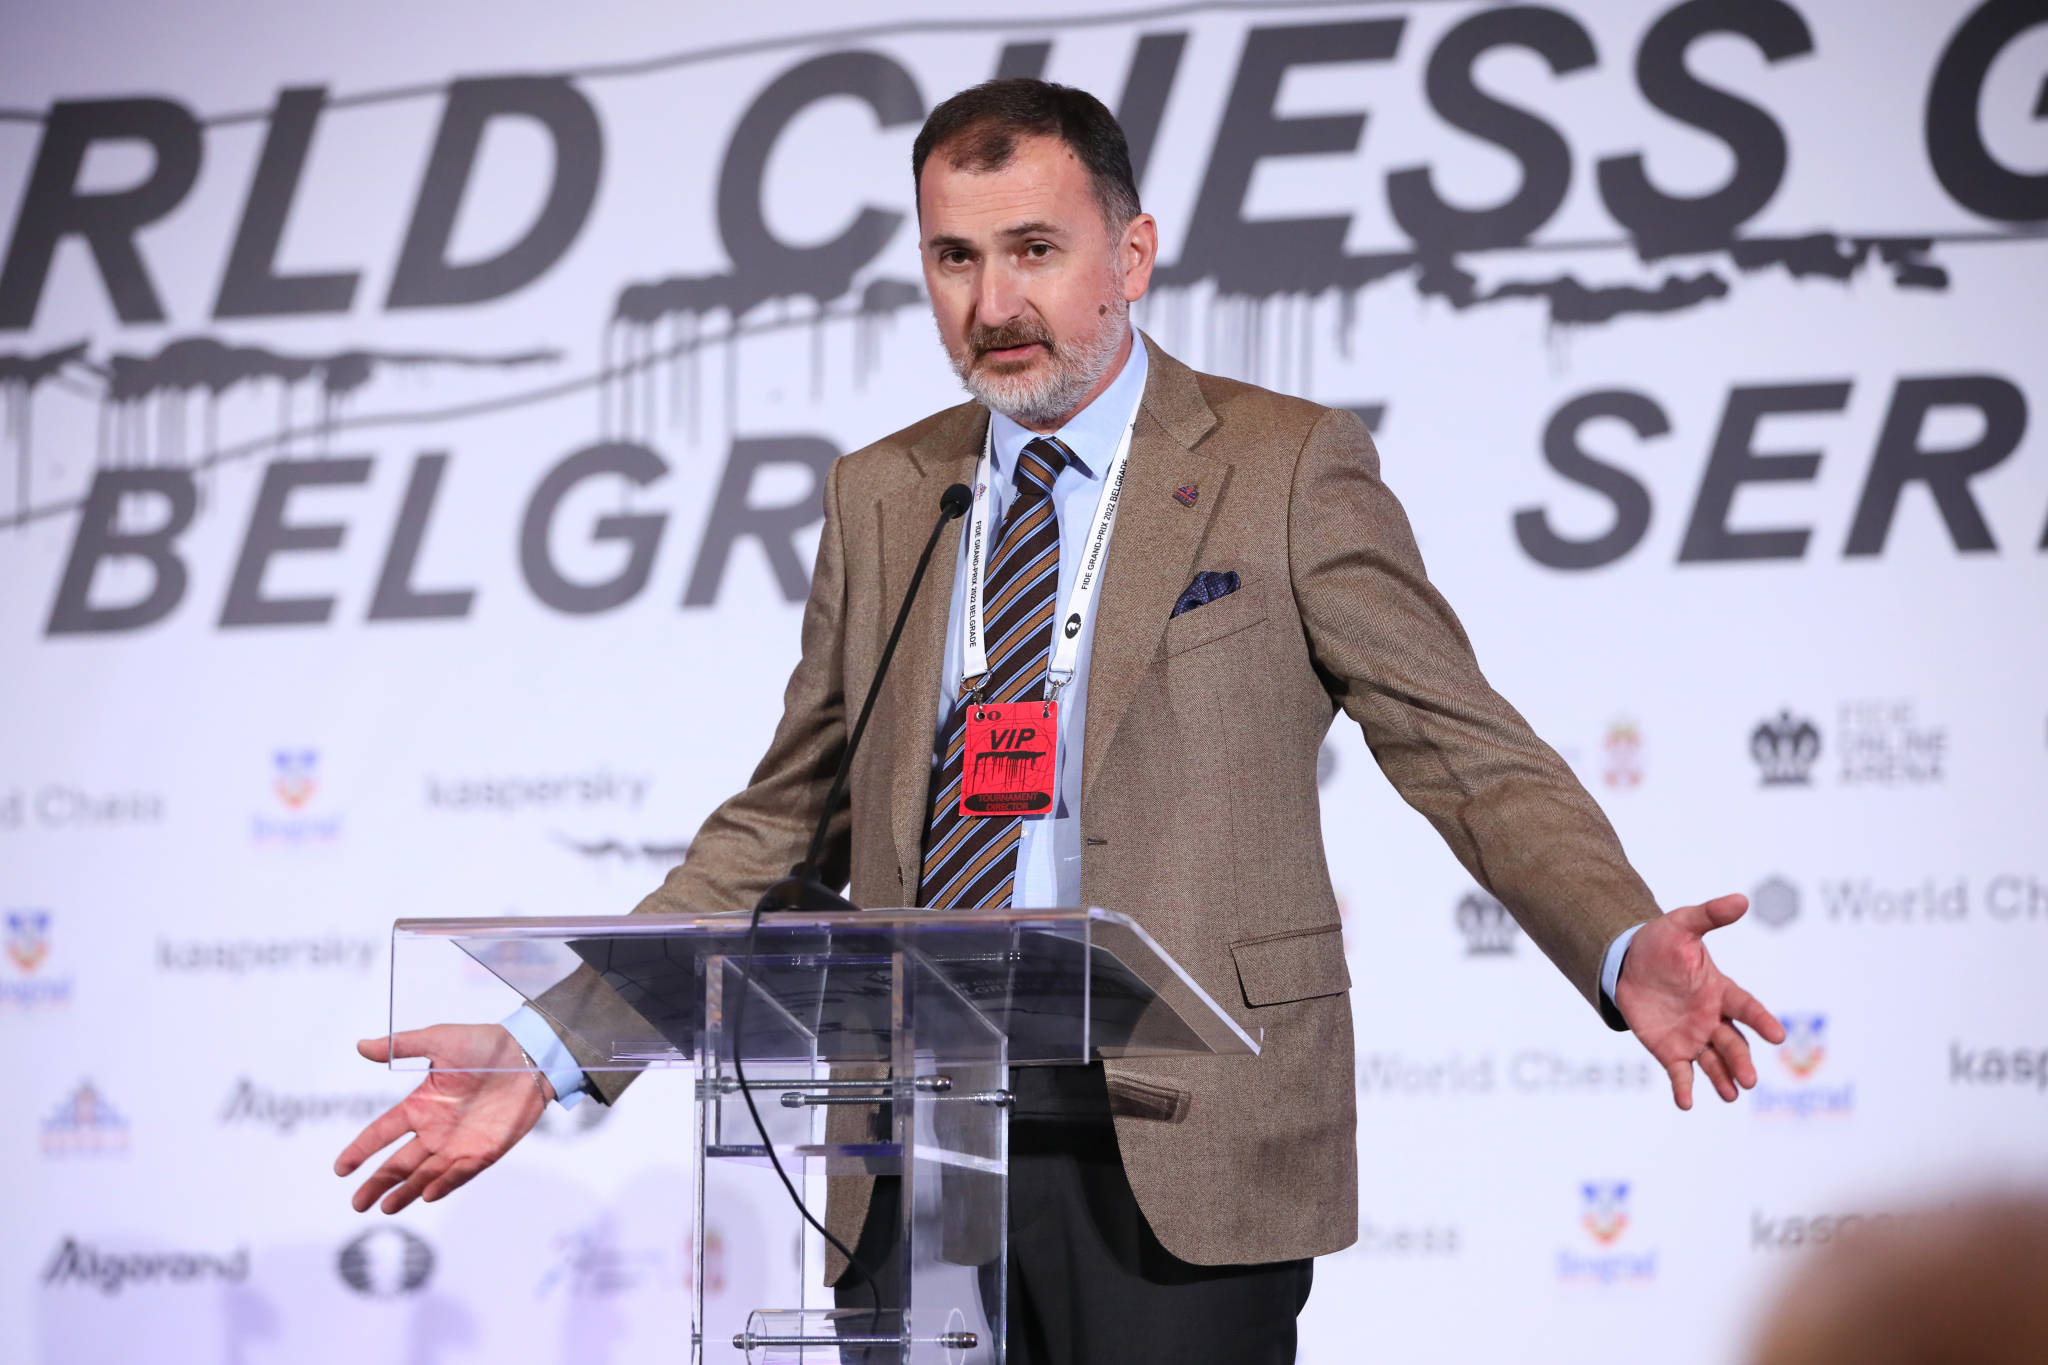 SRPSKI ZET POKORIO BEOGRAD Mađar najbolji na FIDE Gran-priju, Srbija pokazala kakav je domaćin (FOTO)